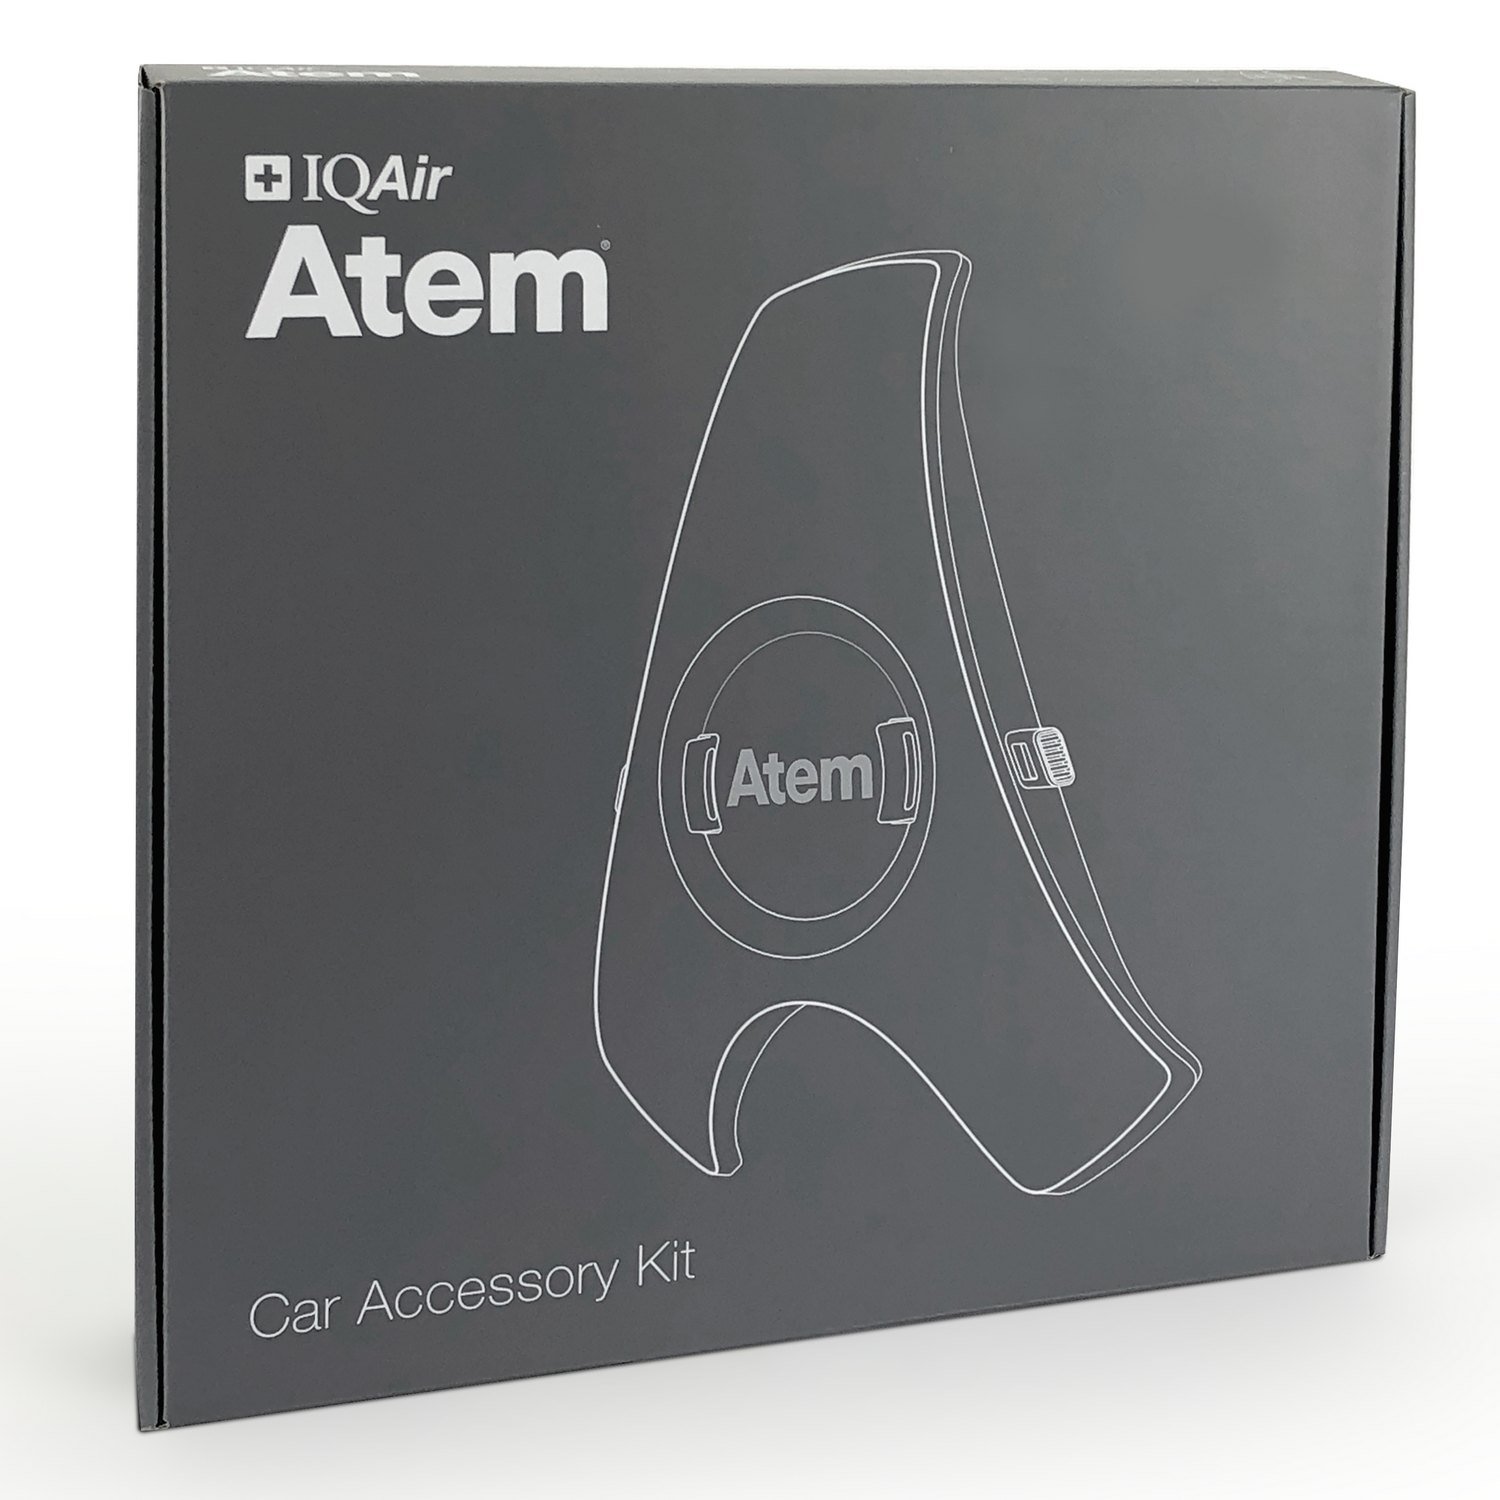 IQAir Atem Car Accessory Kit адаптер для установки на кресло